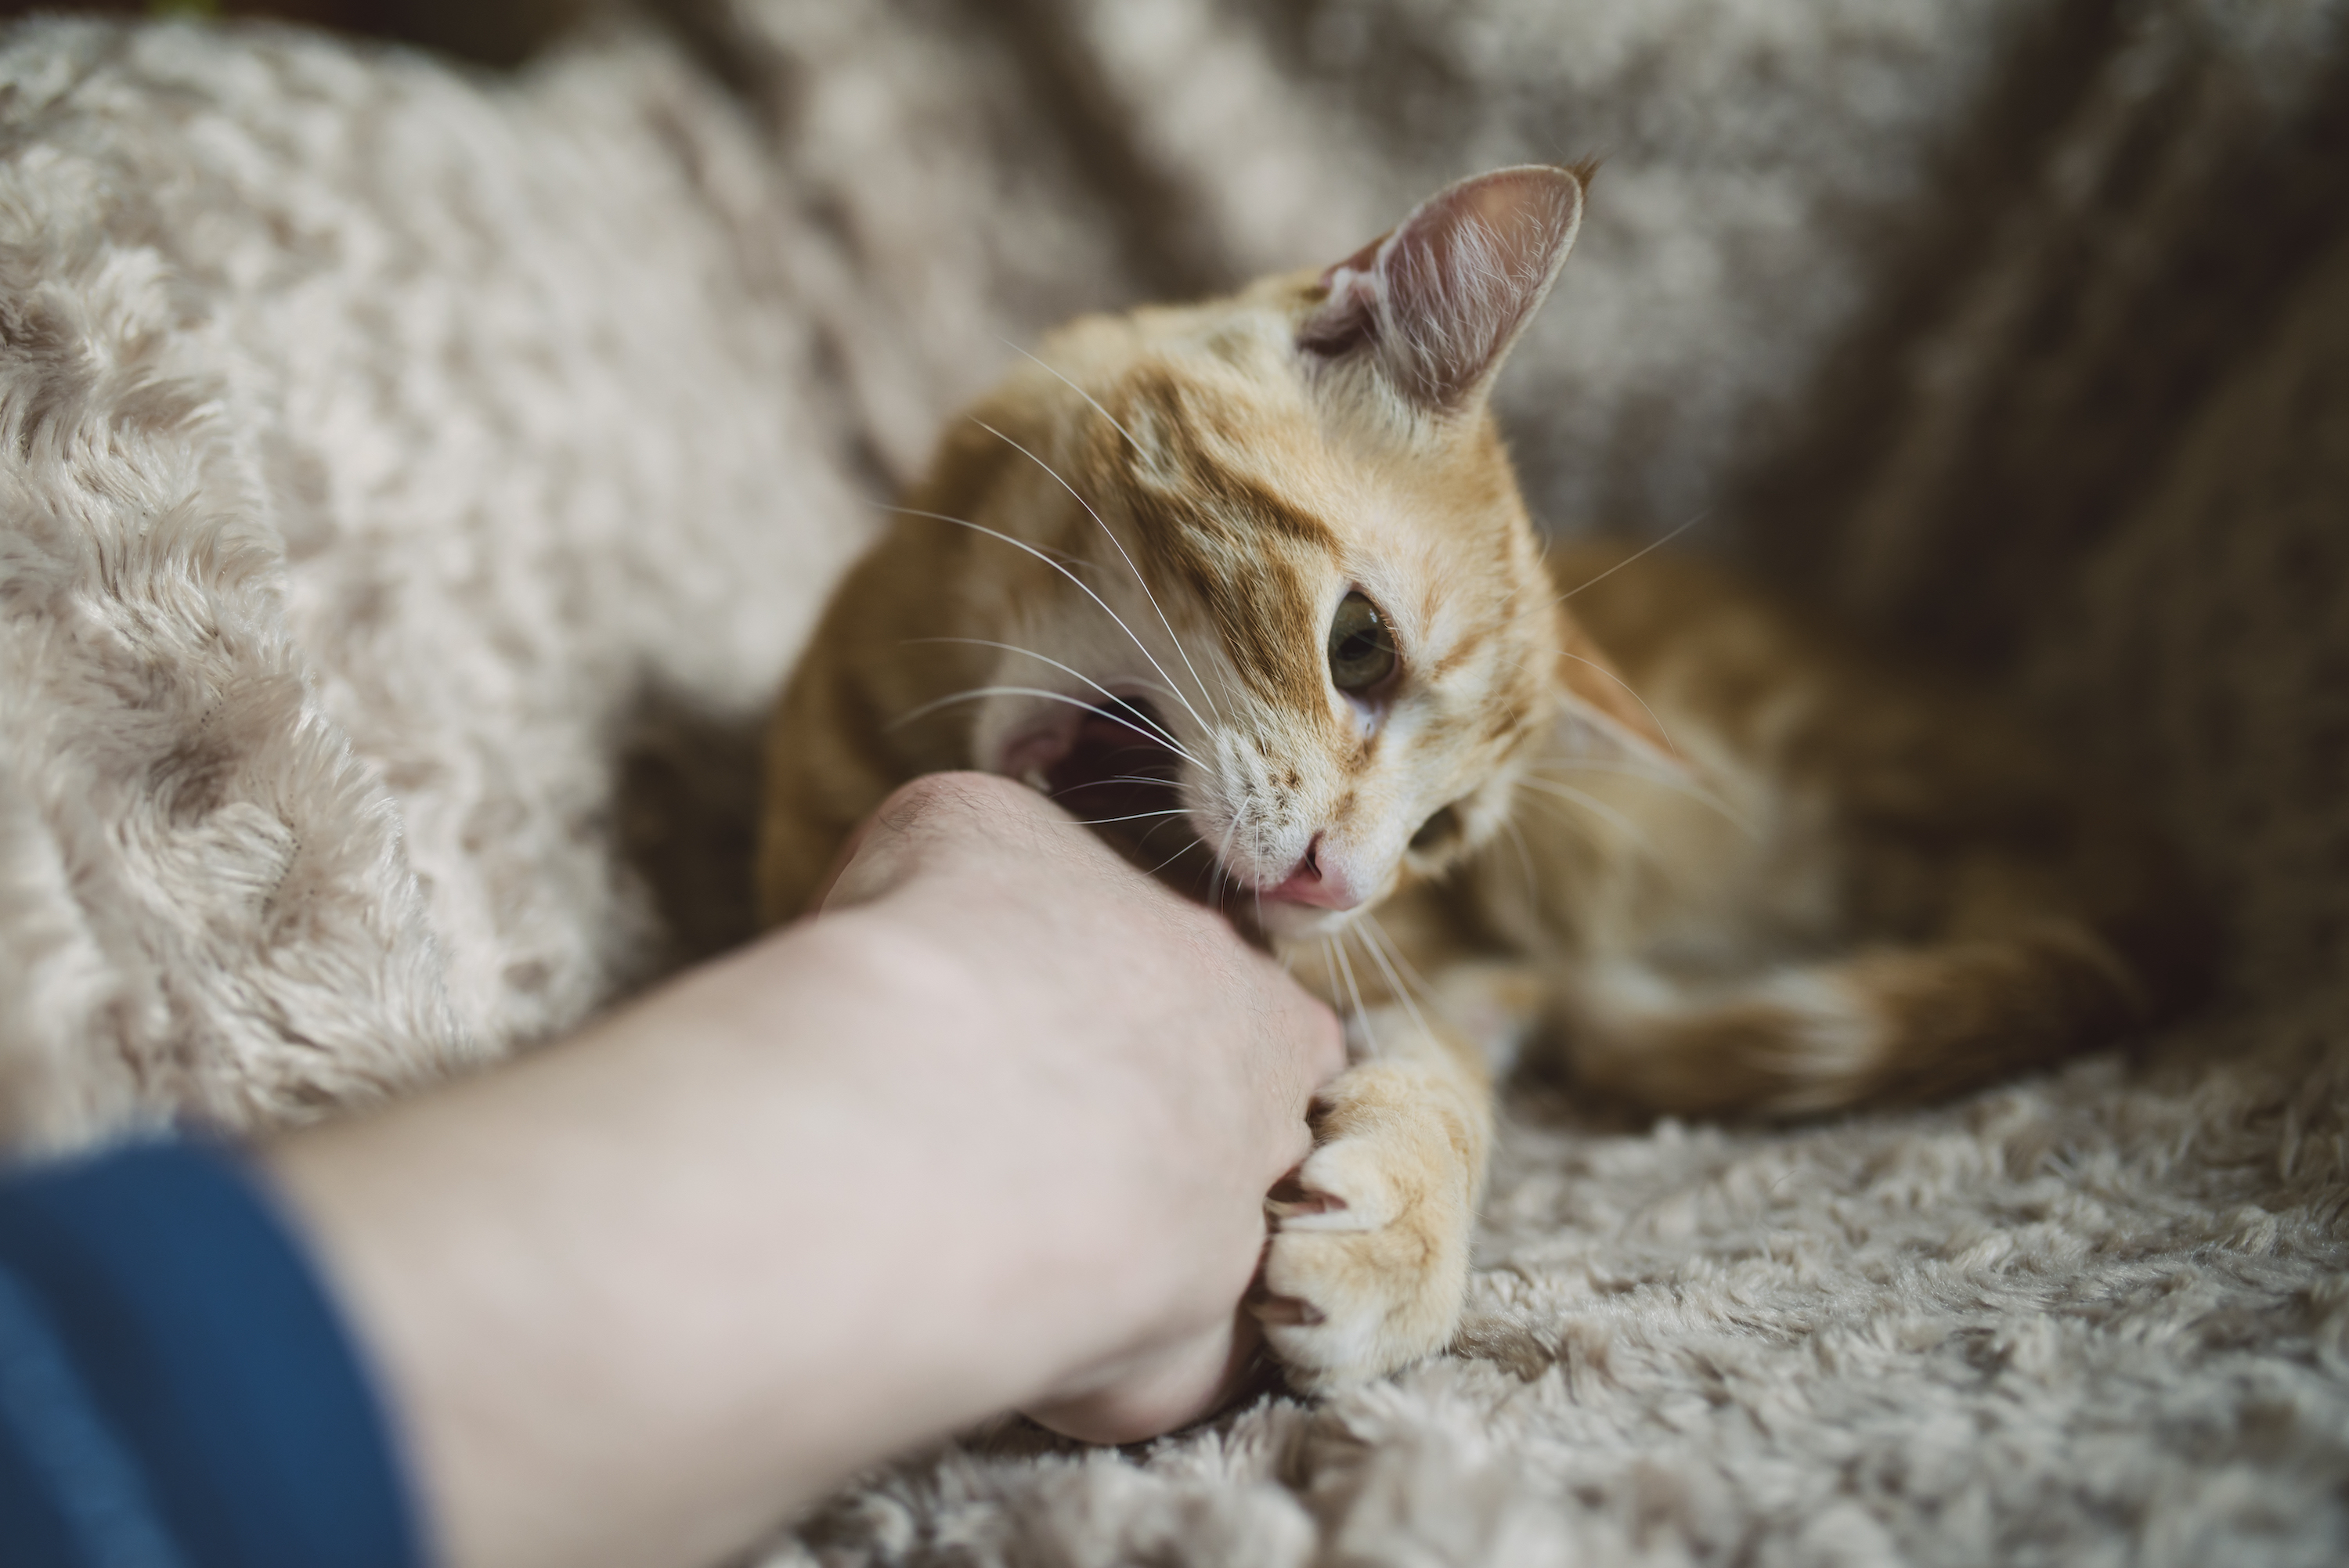 A cat biting its owner